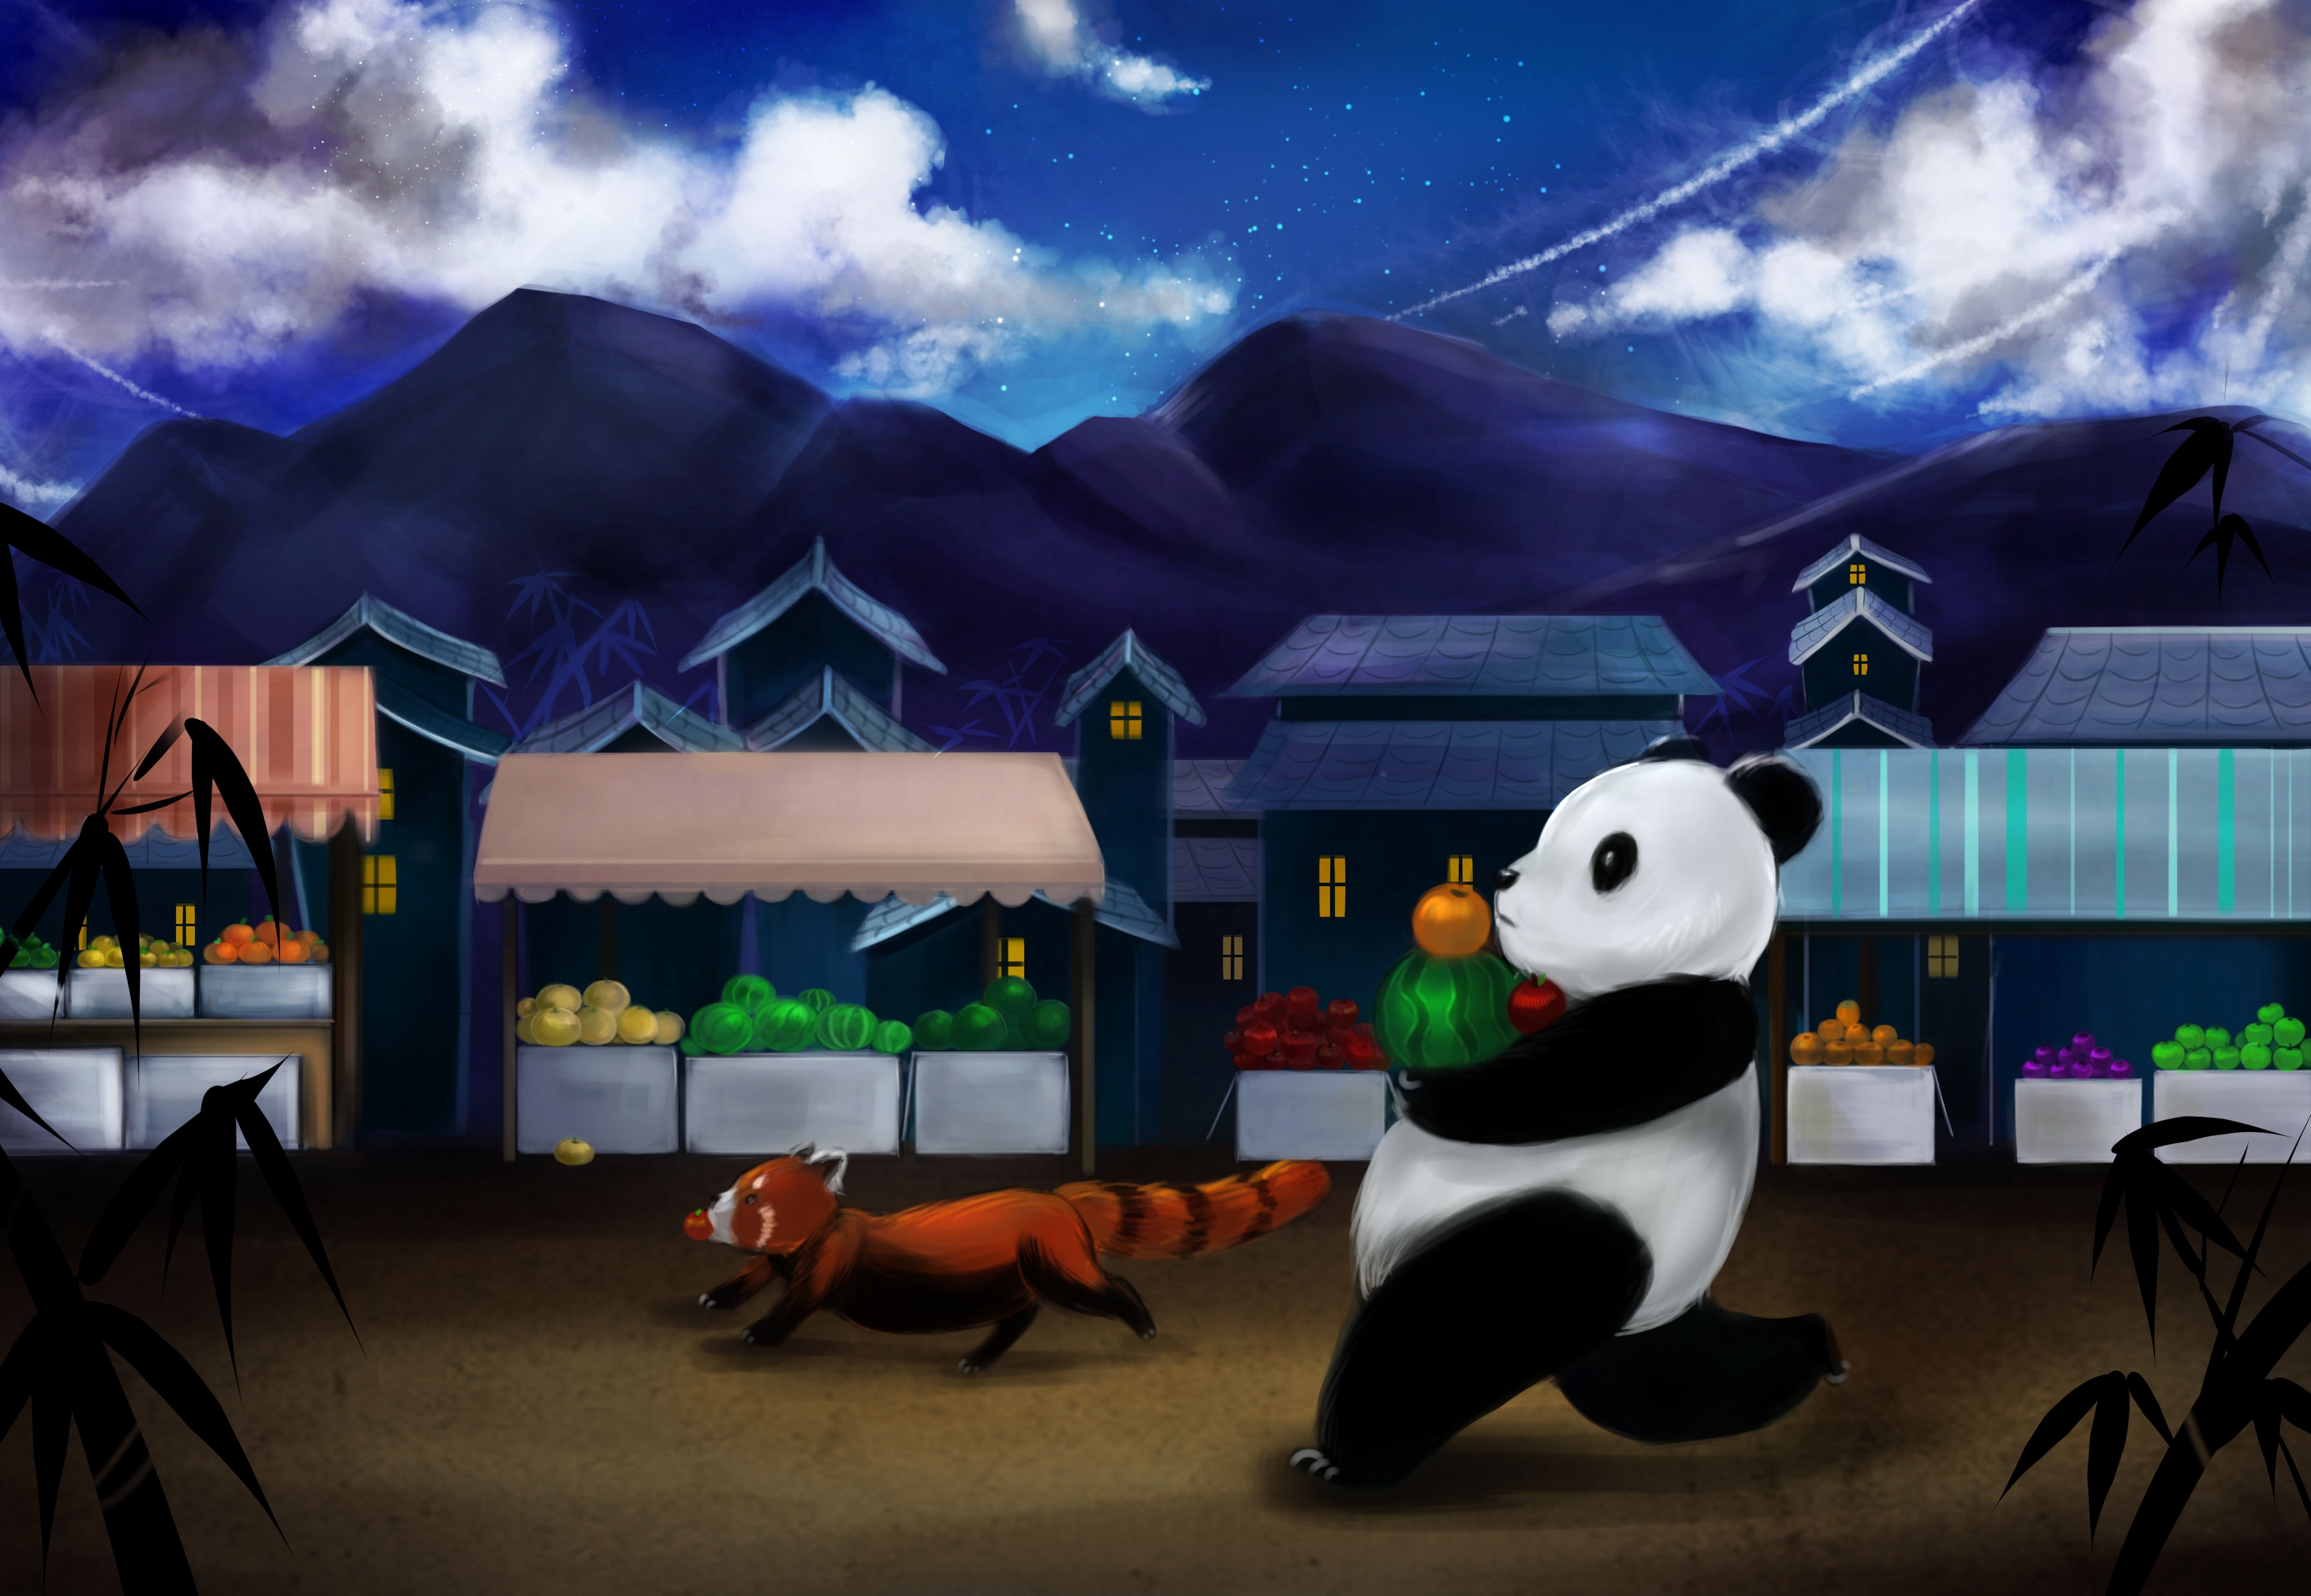 The College Panda Illustration